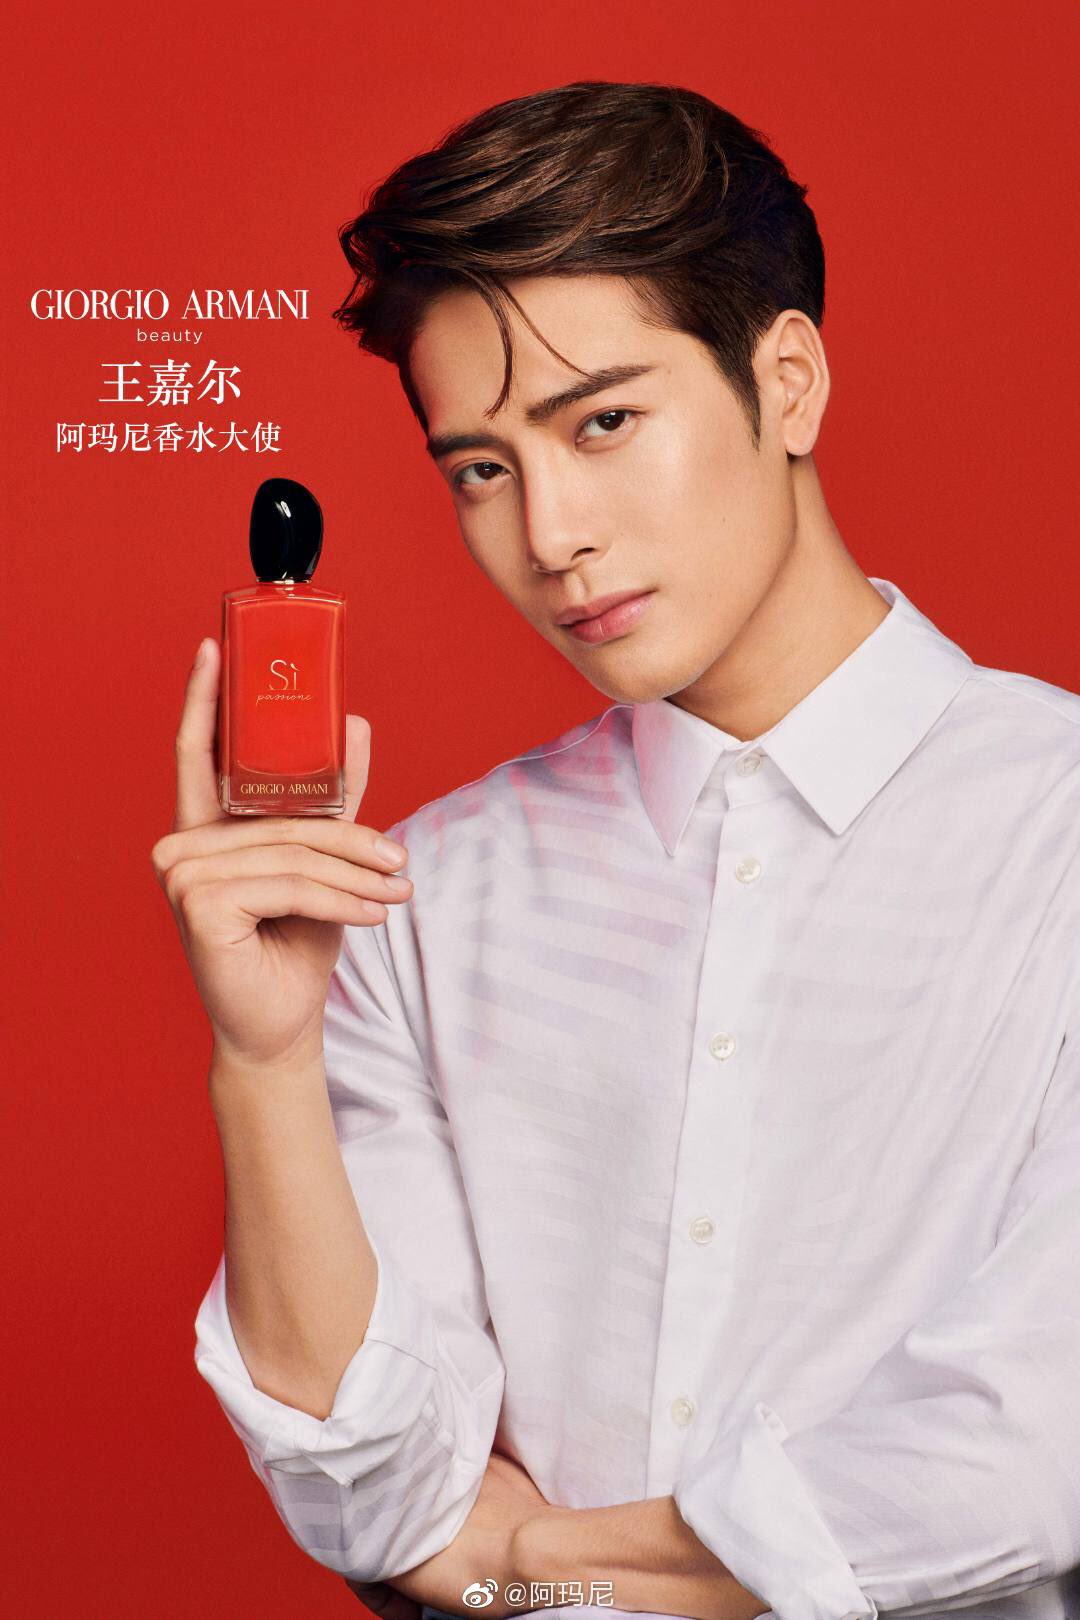 Armani Perfume's Ambassador is the WANG of CHINA